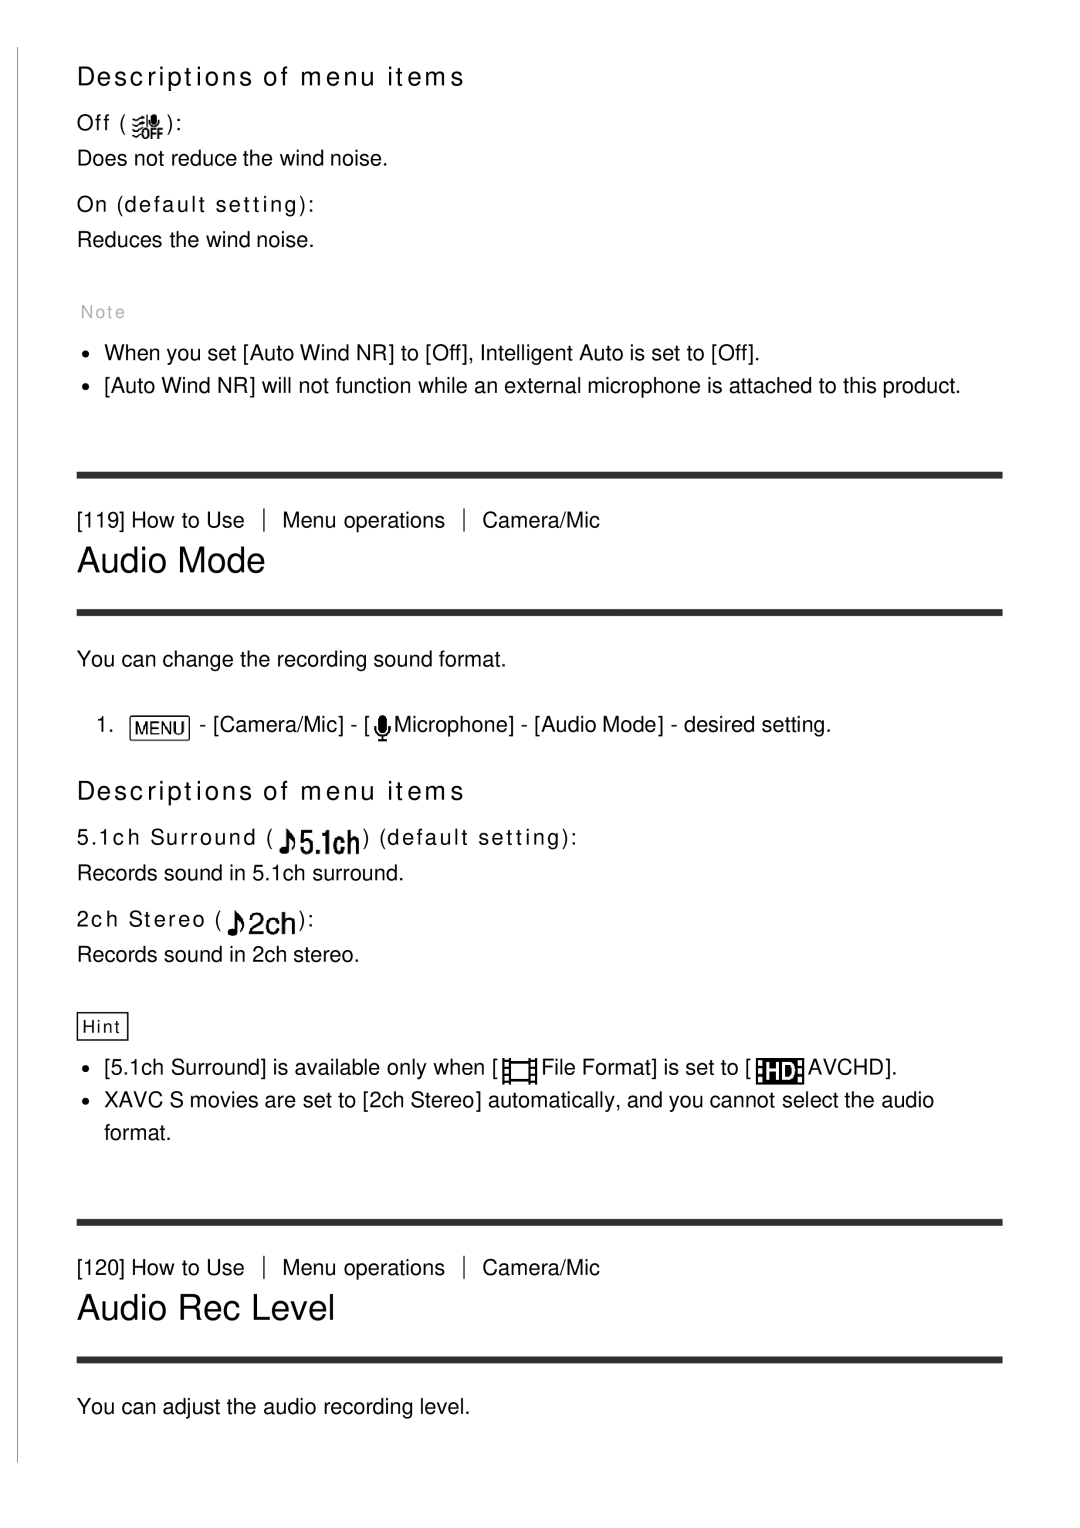 Sony HDR-CX900E manual Audio Mode, Audio Rec Level, 5.1ch Surround default setting, 2ch Stereo, Descriptions of menu items 